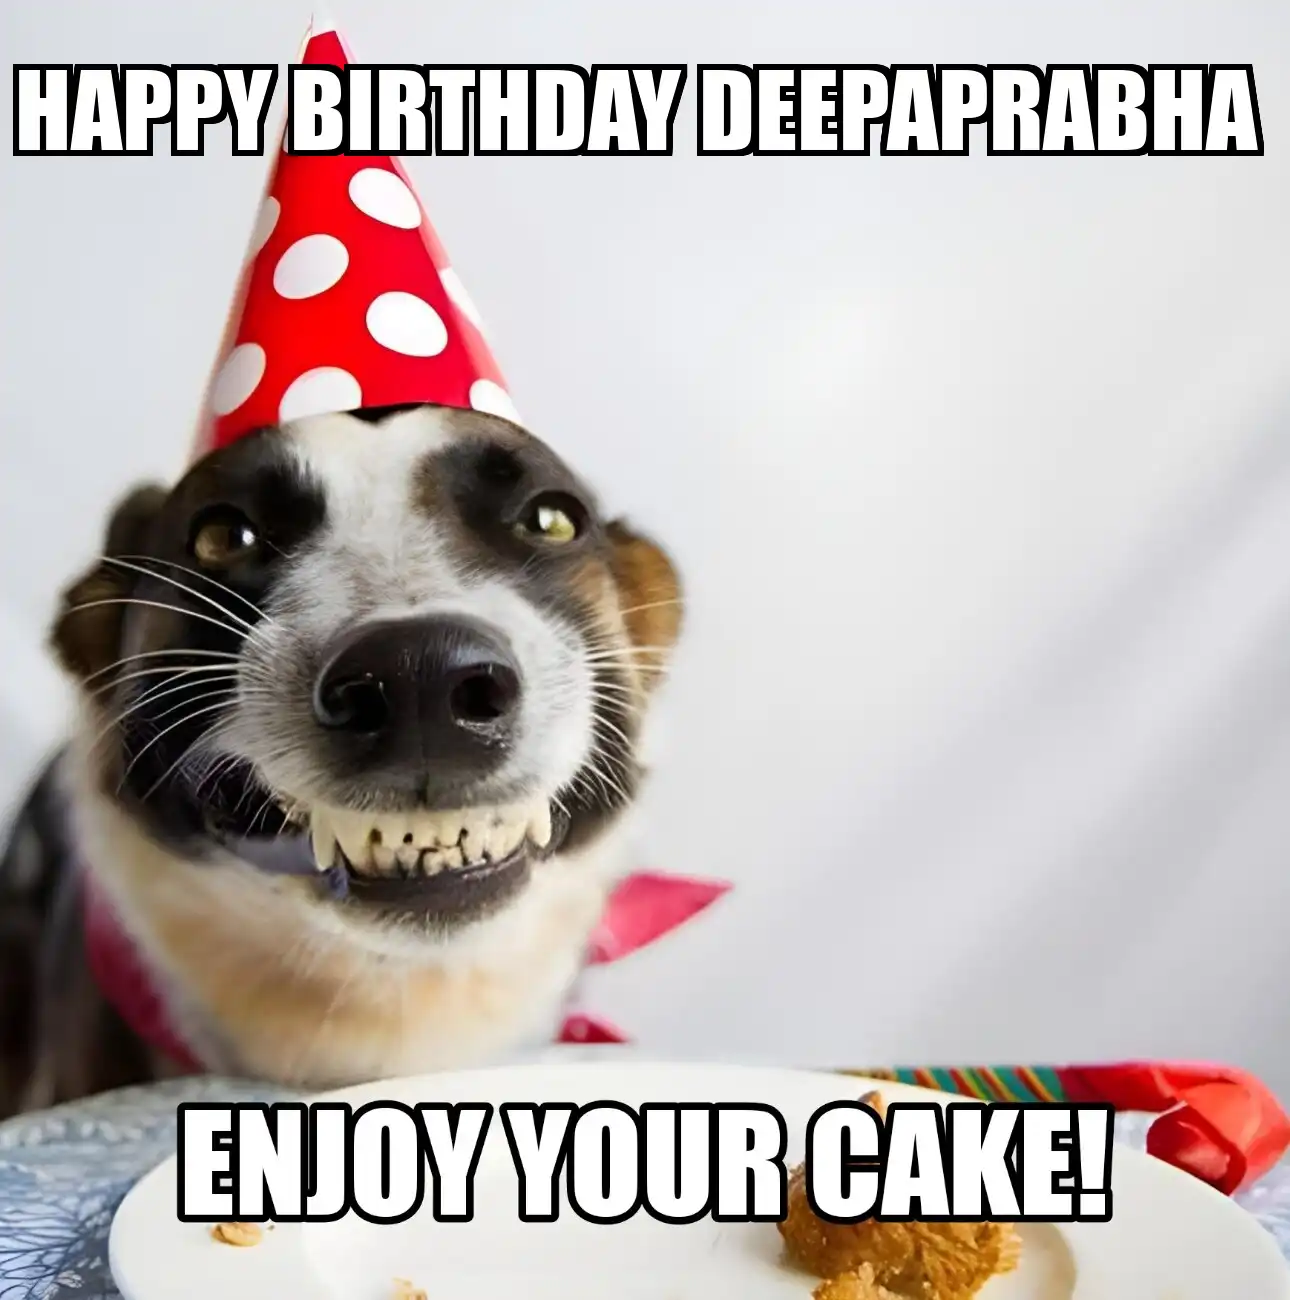 Happy Birthday Deepaprabha Enjoy Your Cake Dog Meme